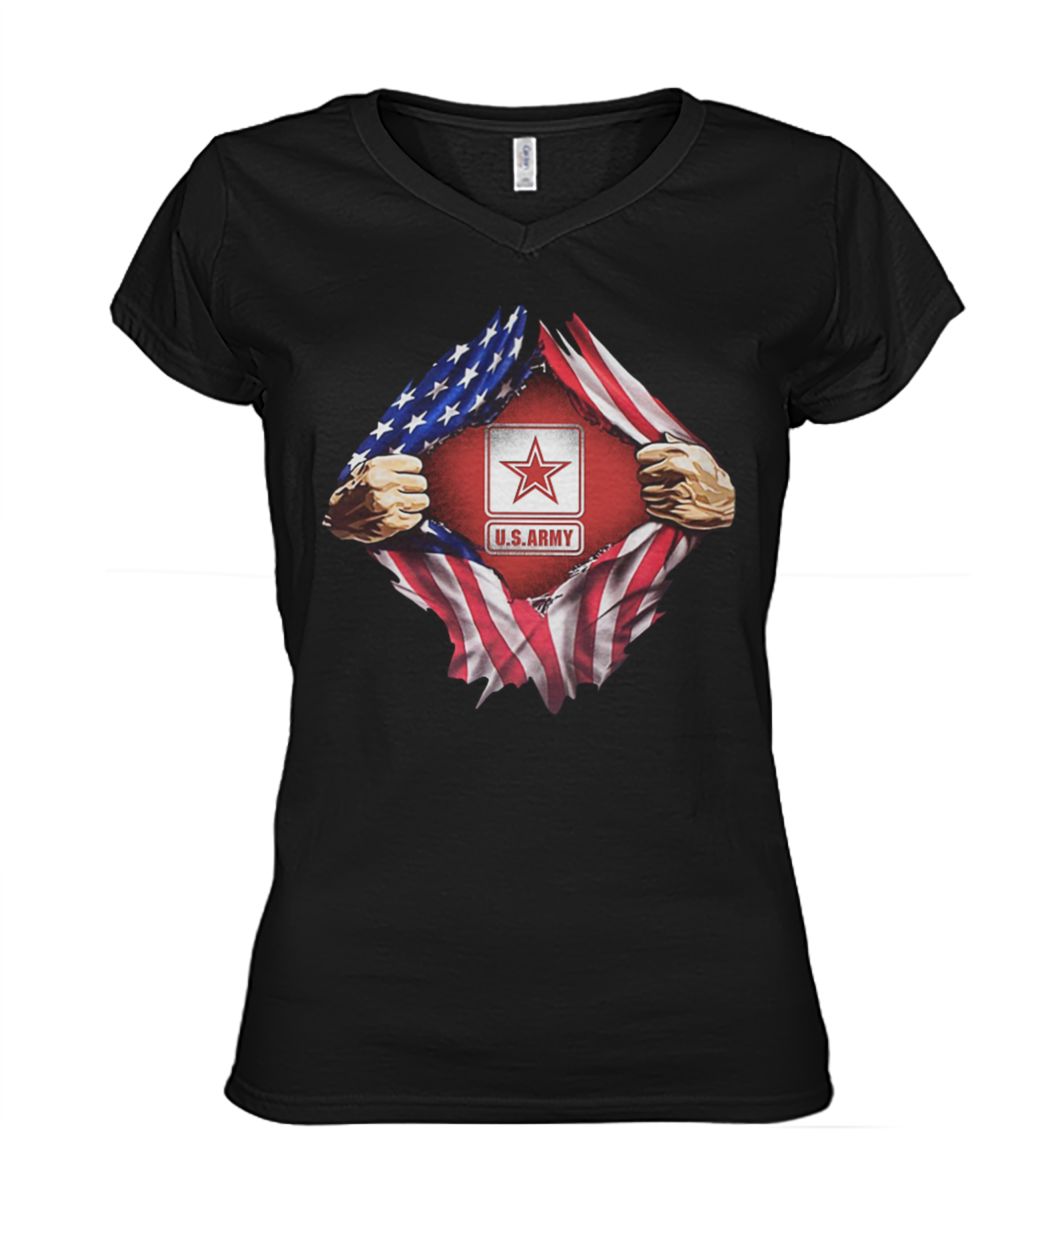 U S Army inside me american flag women's v-neck